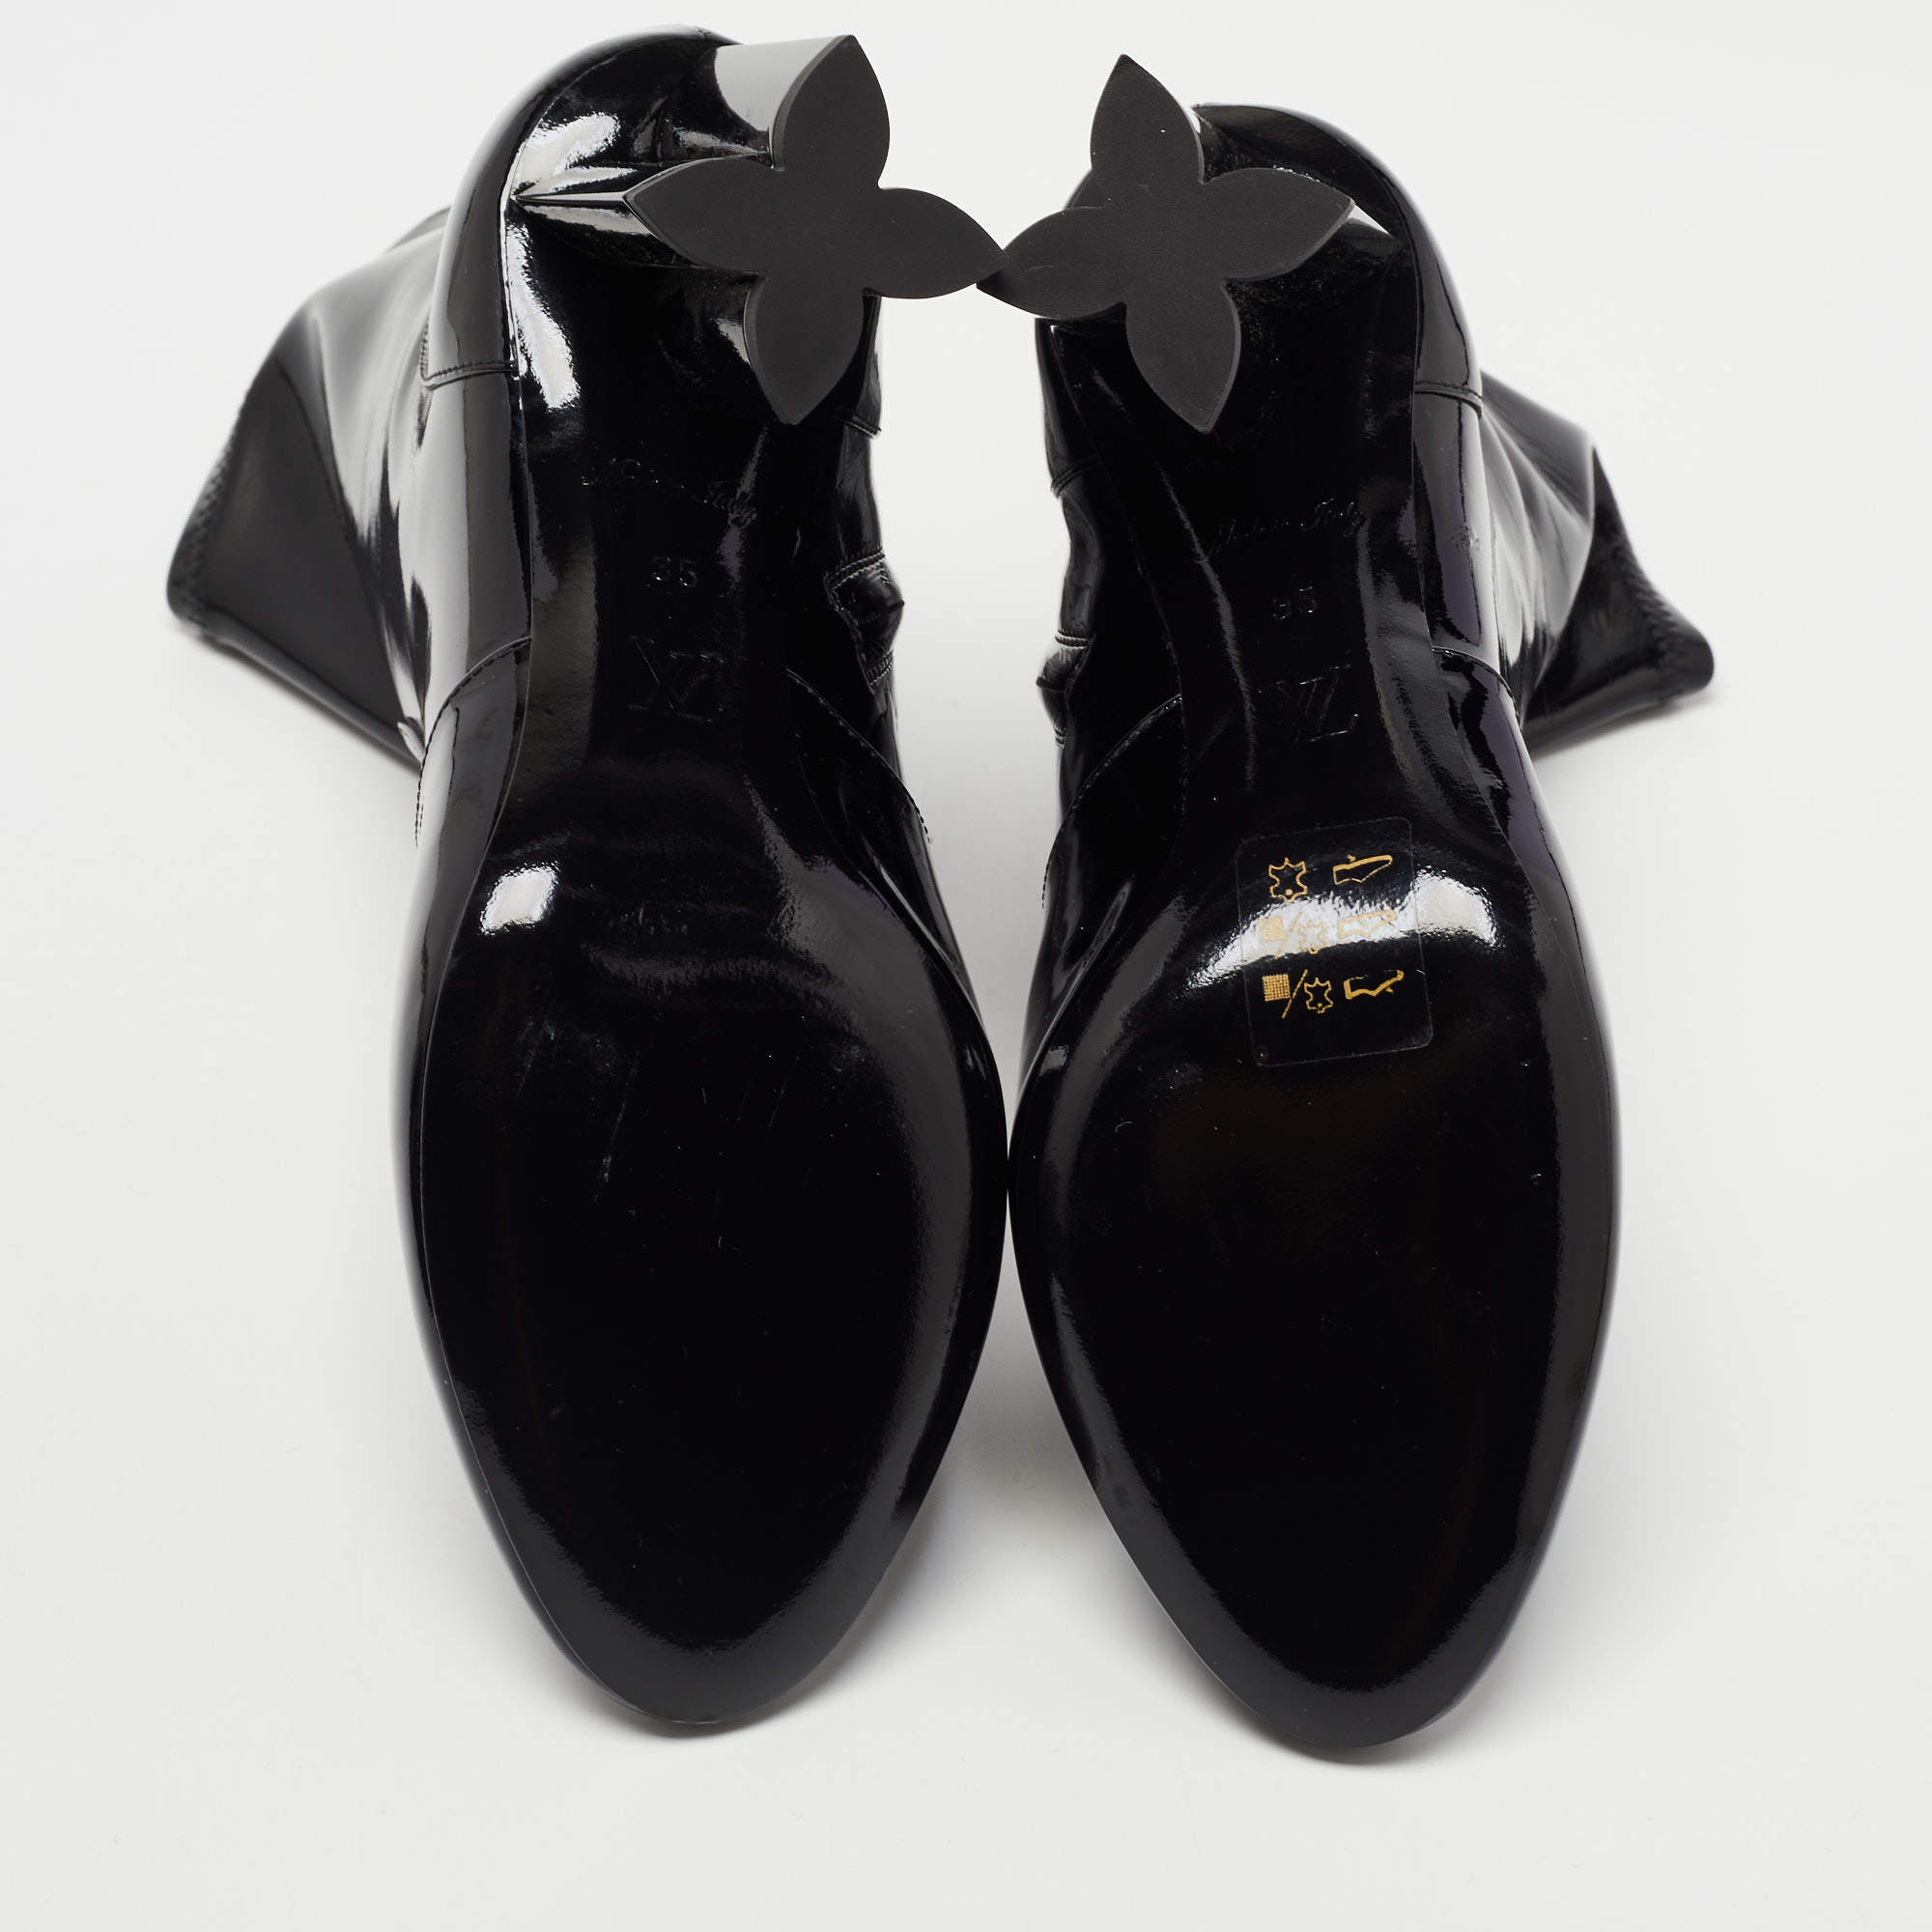 $1,200 LOUIS VUITTON Black Patent Leather Ankle Boots Size 36